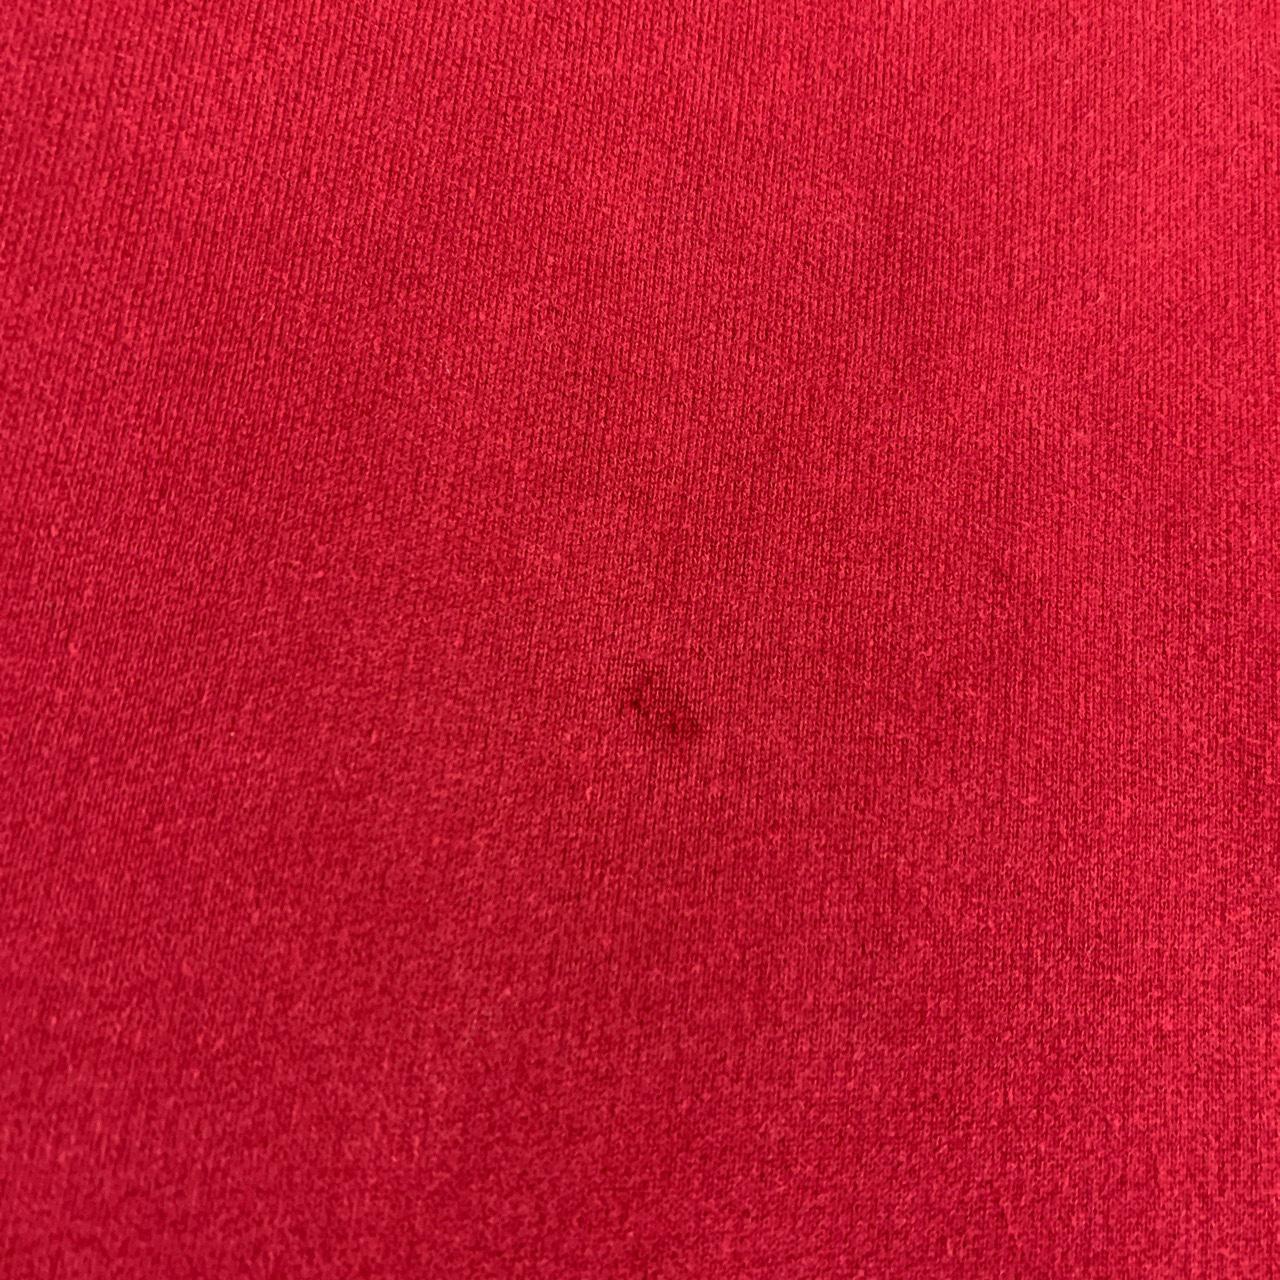 Vintage Russell Athletic Pro Cotton Red Sweatshirt... - Depop